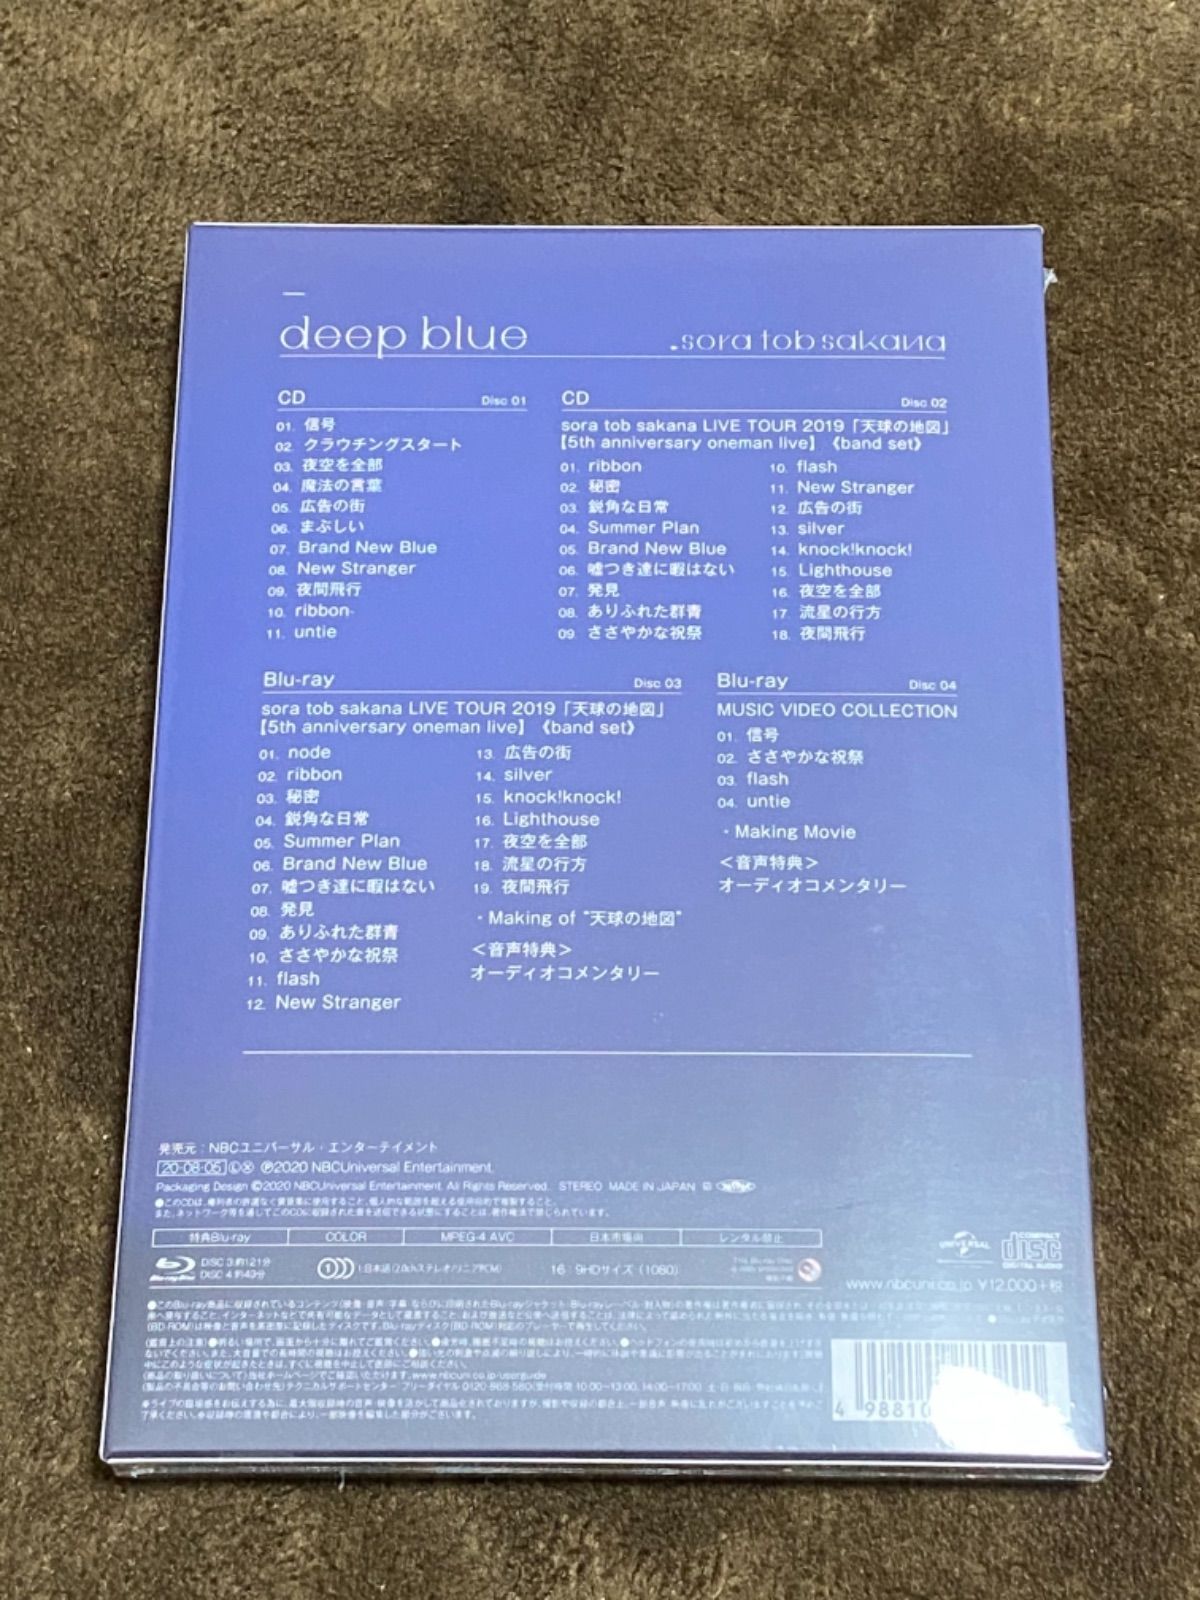 sora tob sakana deep blue 初回限定盤 Blu-ray - DISC Record - メルカリ